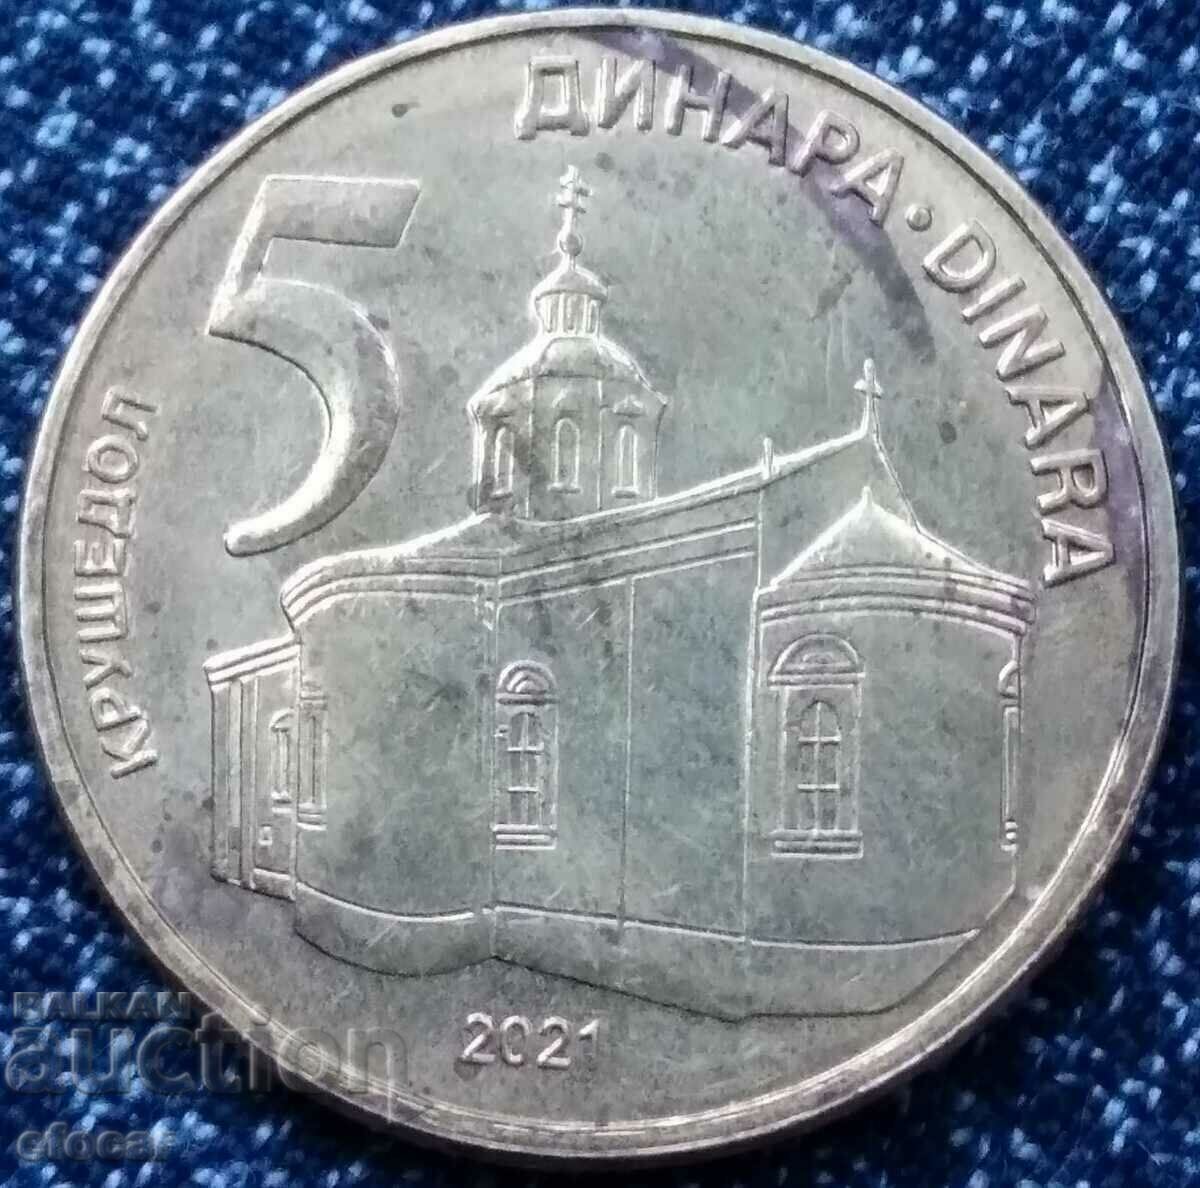 5 dinari Serbia 2021